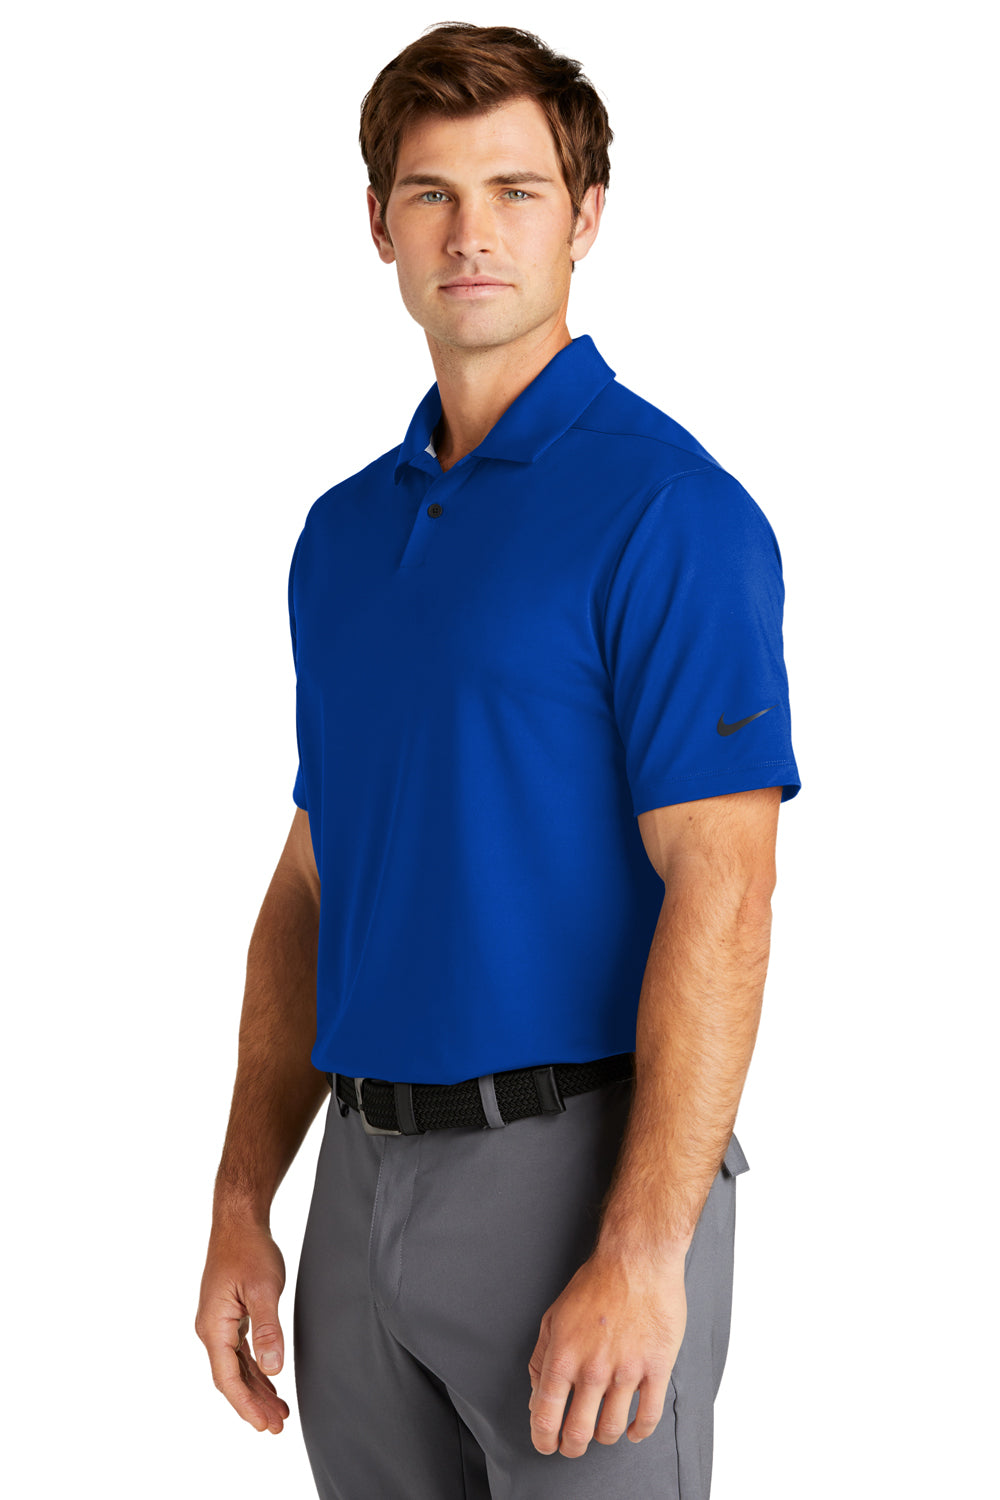 Nike NKDC2108 Mens Vapor Dri-Fit Moisture Wicking Short Sleeve Polo Shirt Game Royal Blue Model 3Q